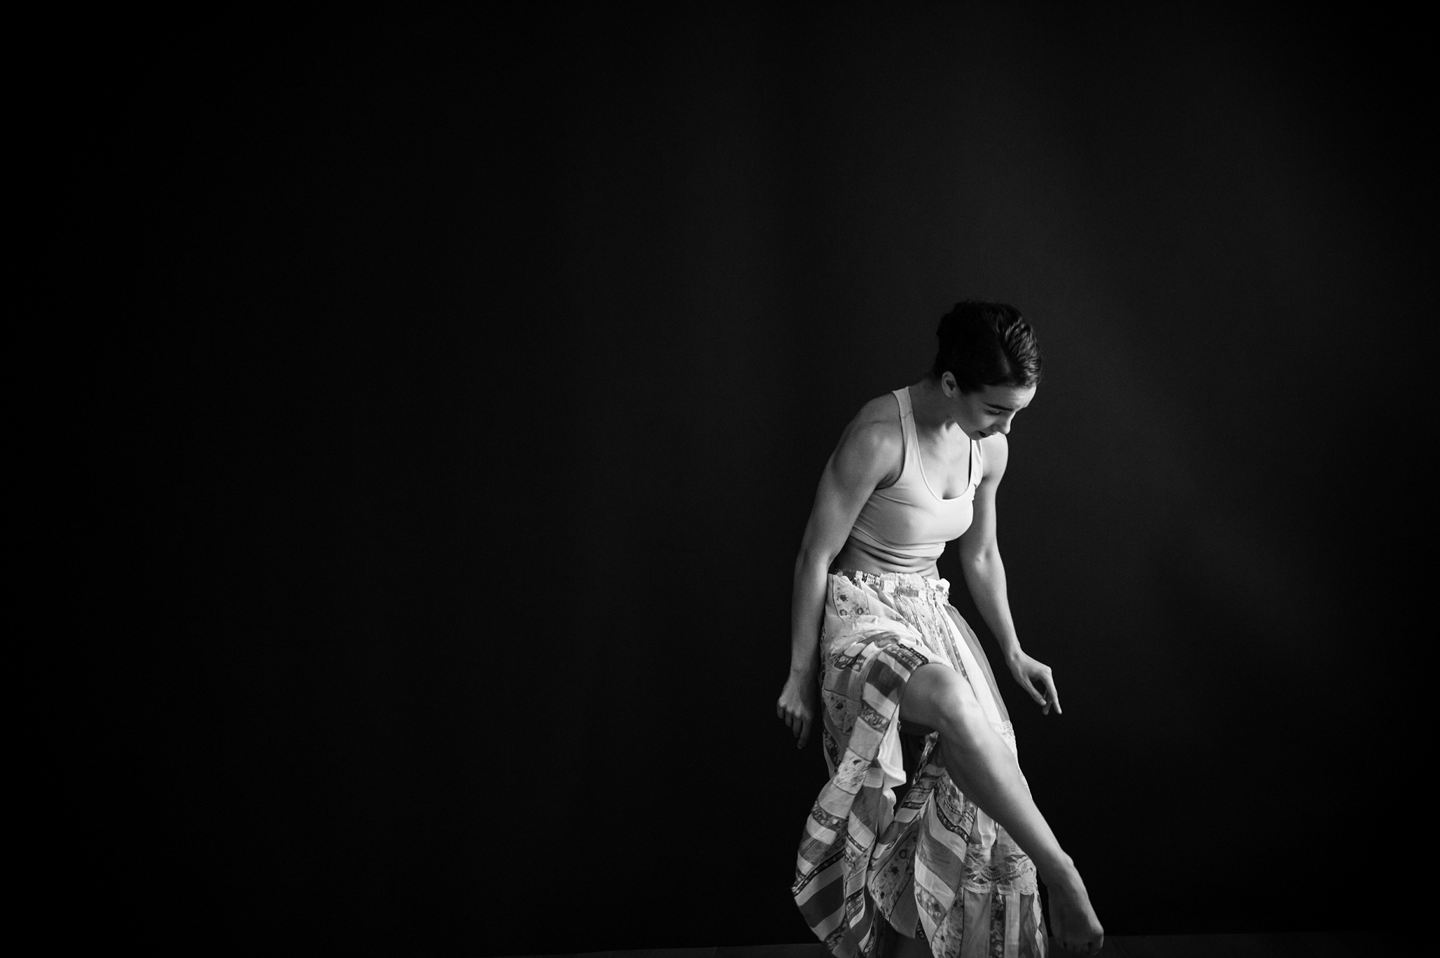 Los Angeles Dance Portrait Photo - Olga Sokolova - by Tommy Xing Photography 16.JPG